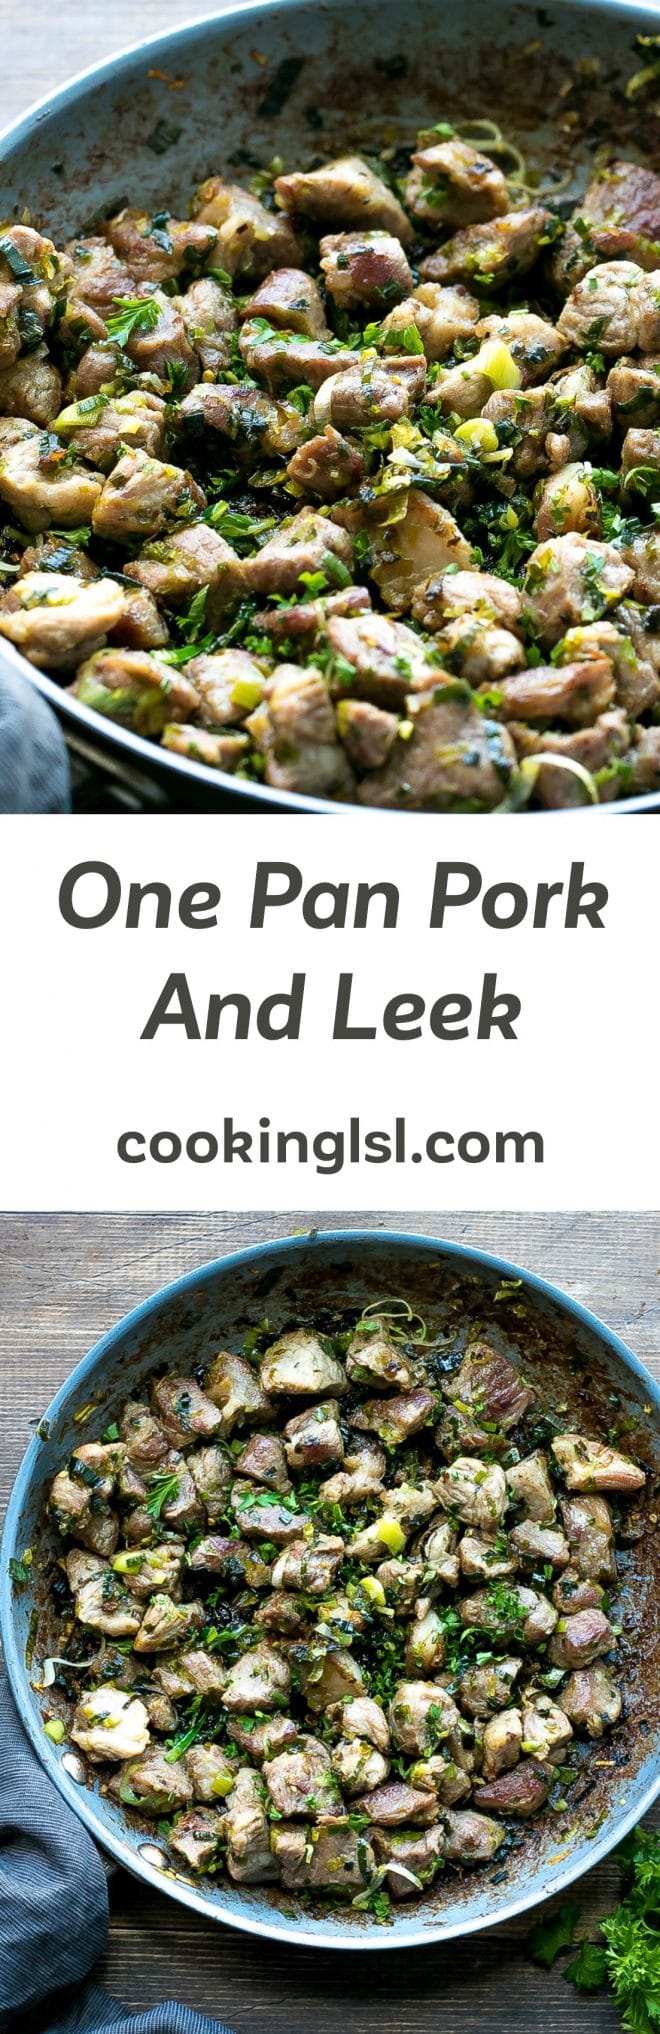 One Pan Pork And Leek Recipe